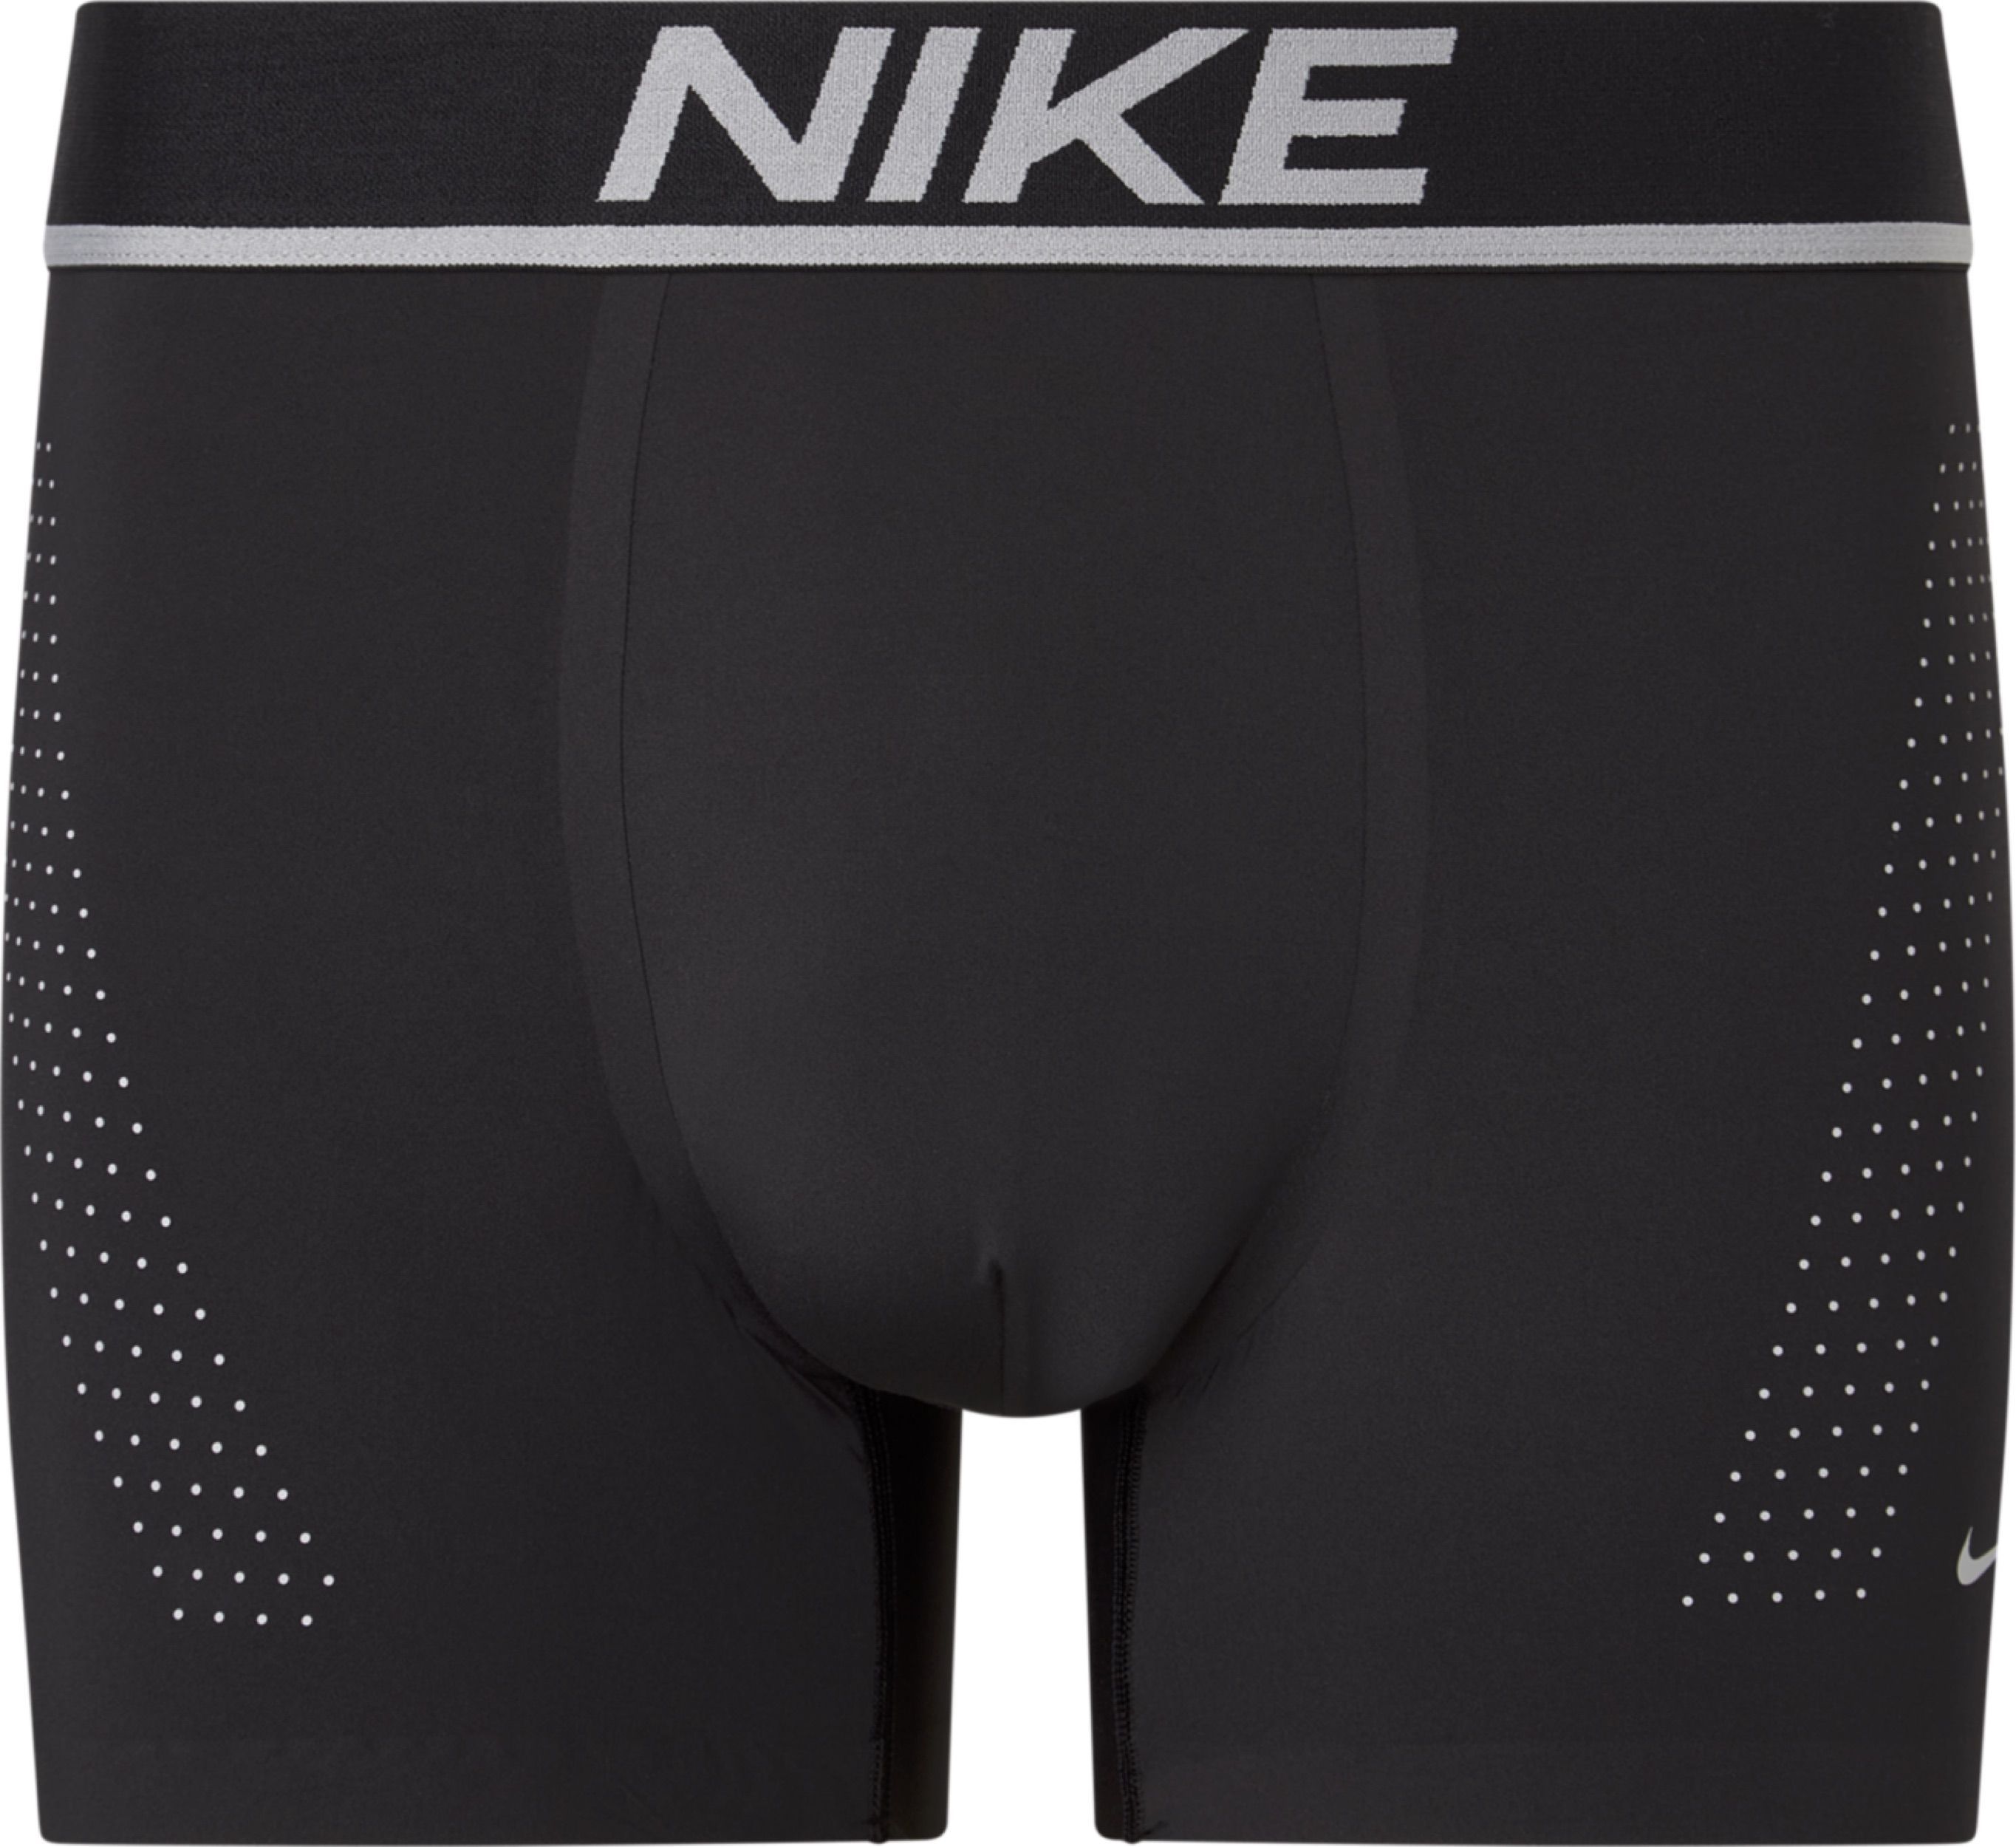 Nike's Latest Underwear Range